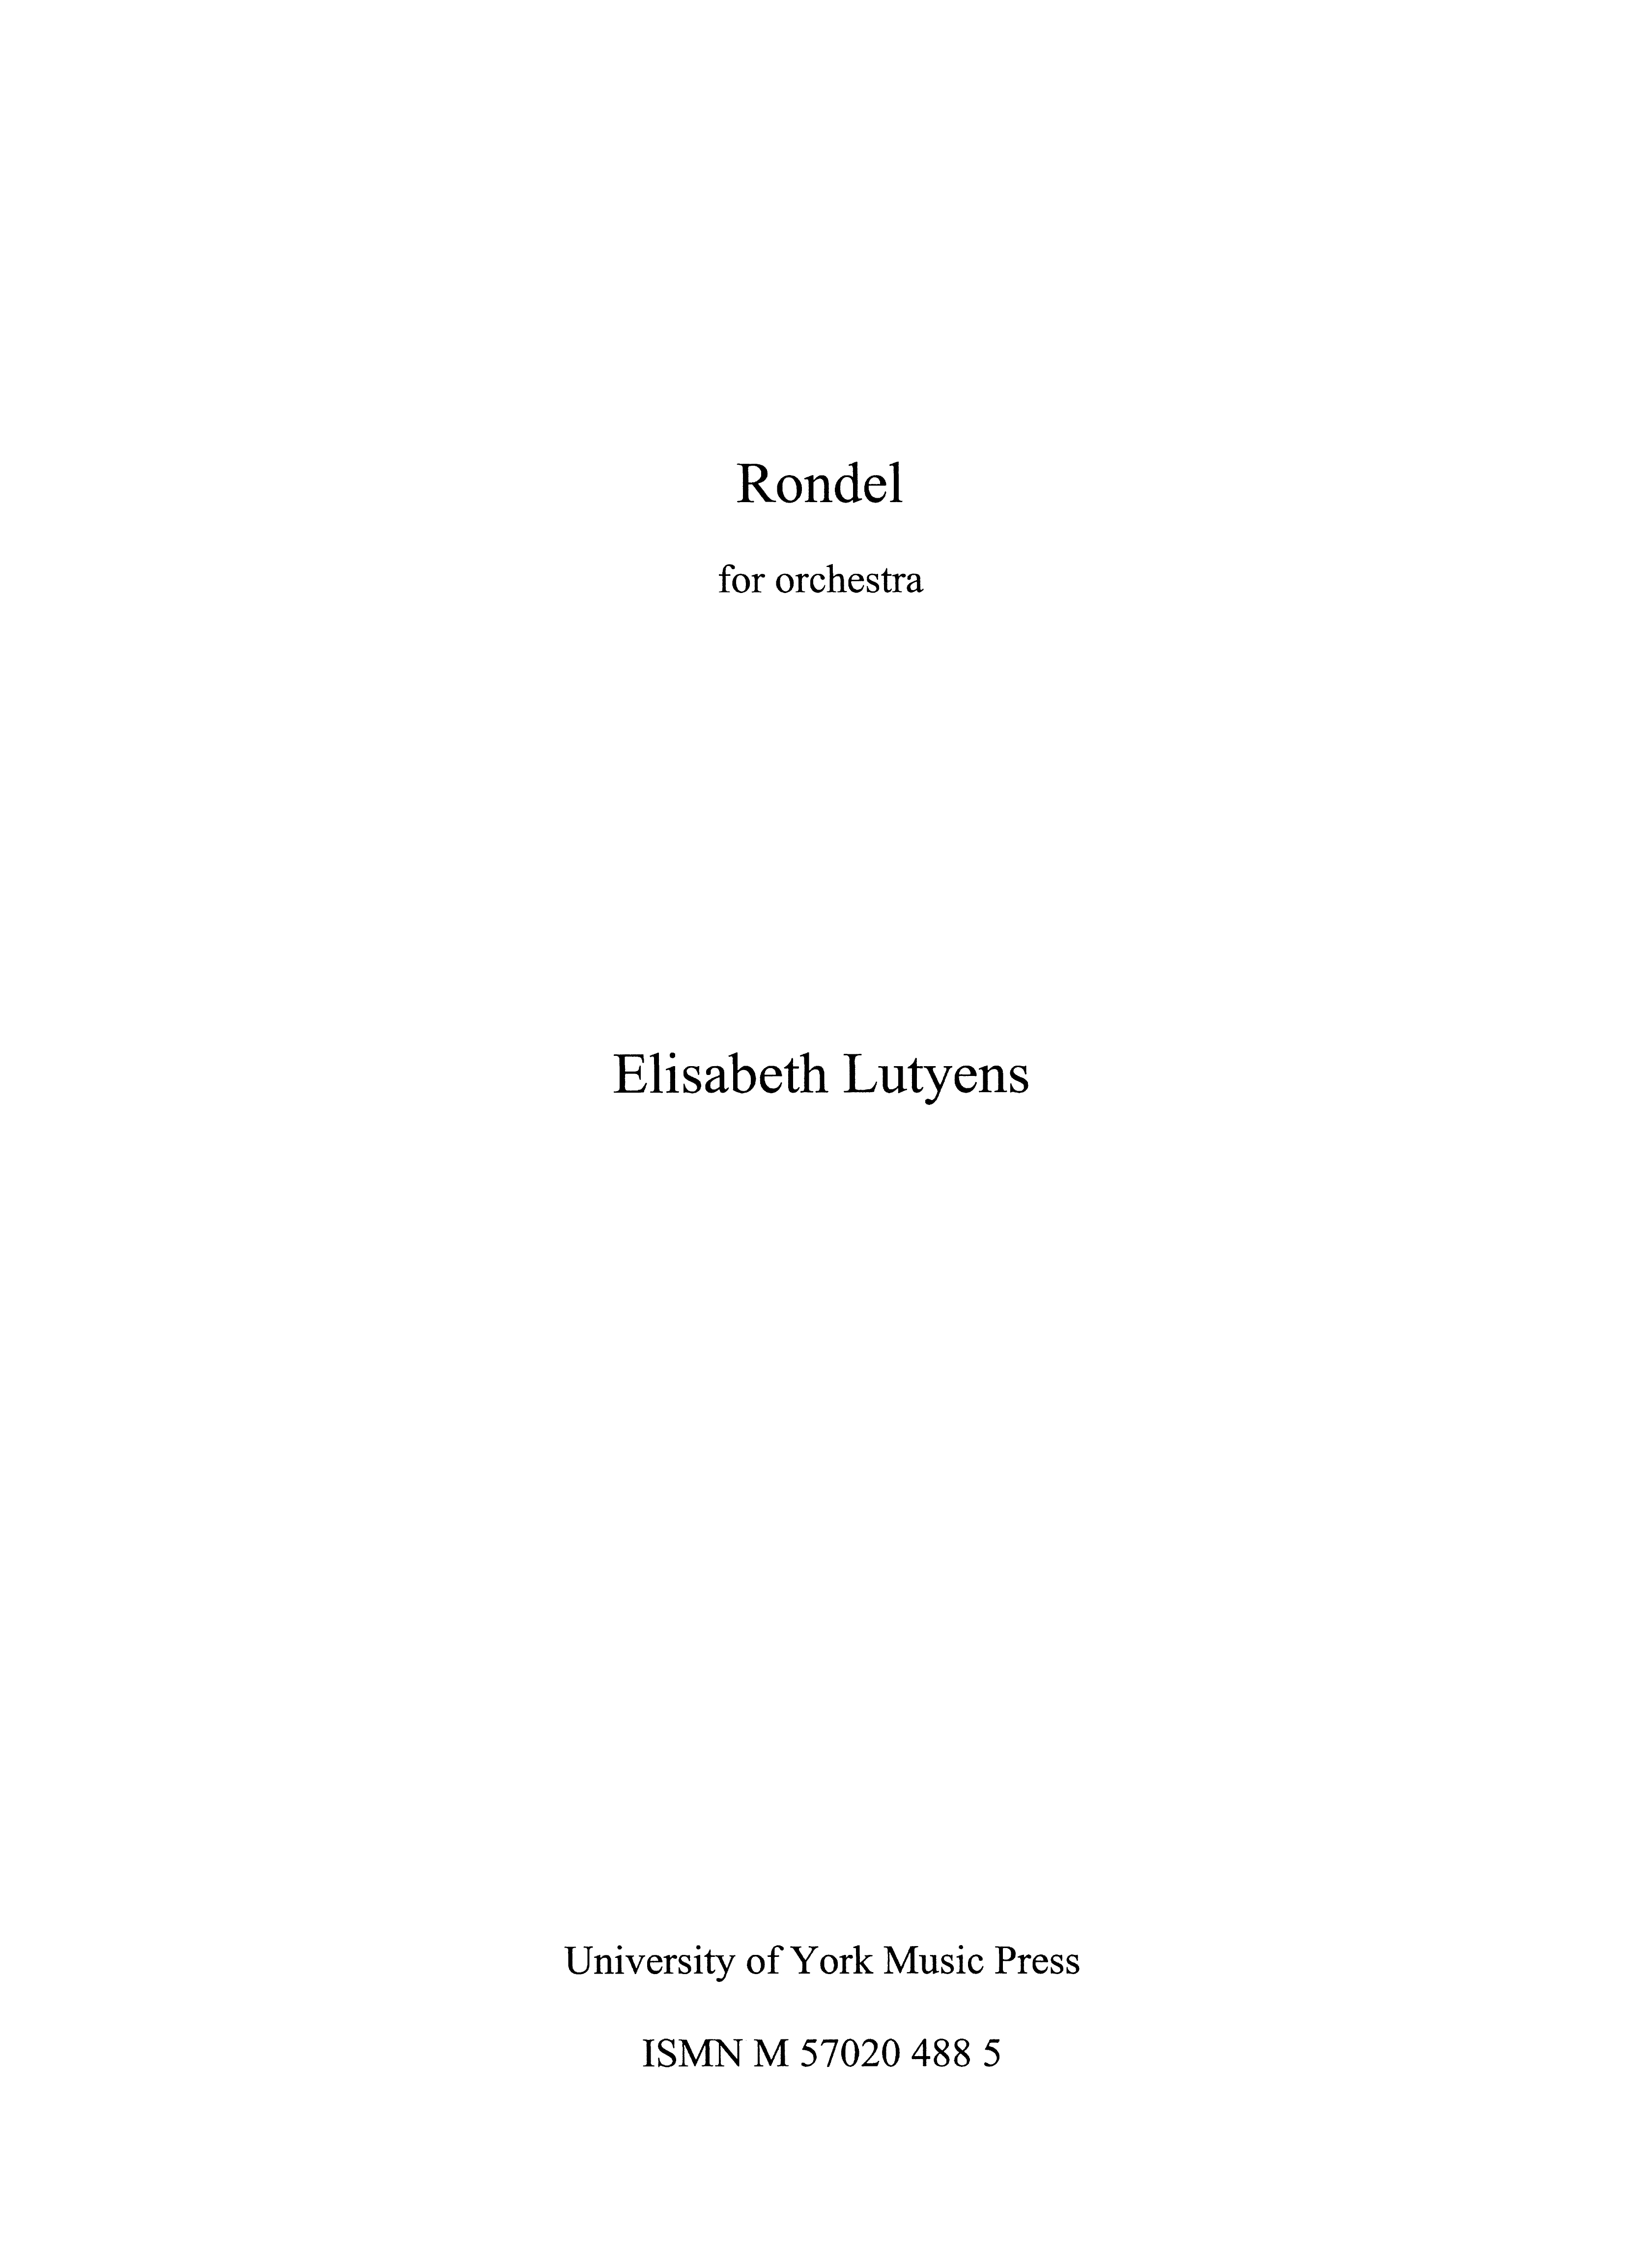 Elisabeth Lutyens: Rondel Op.108: Orchestra: Score